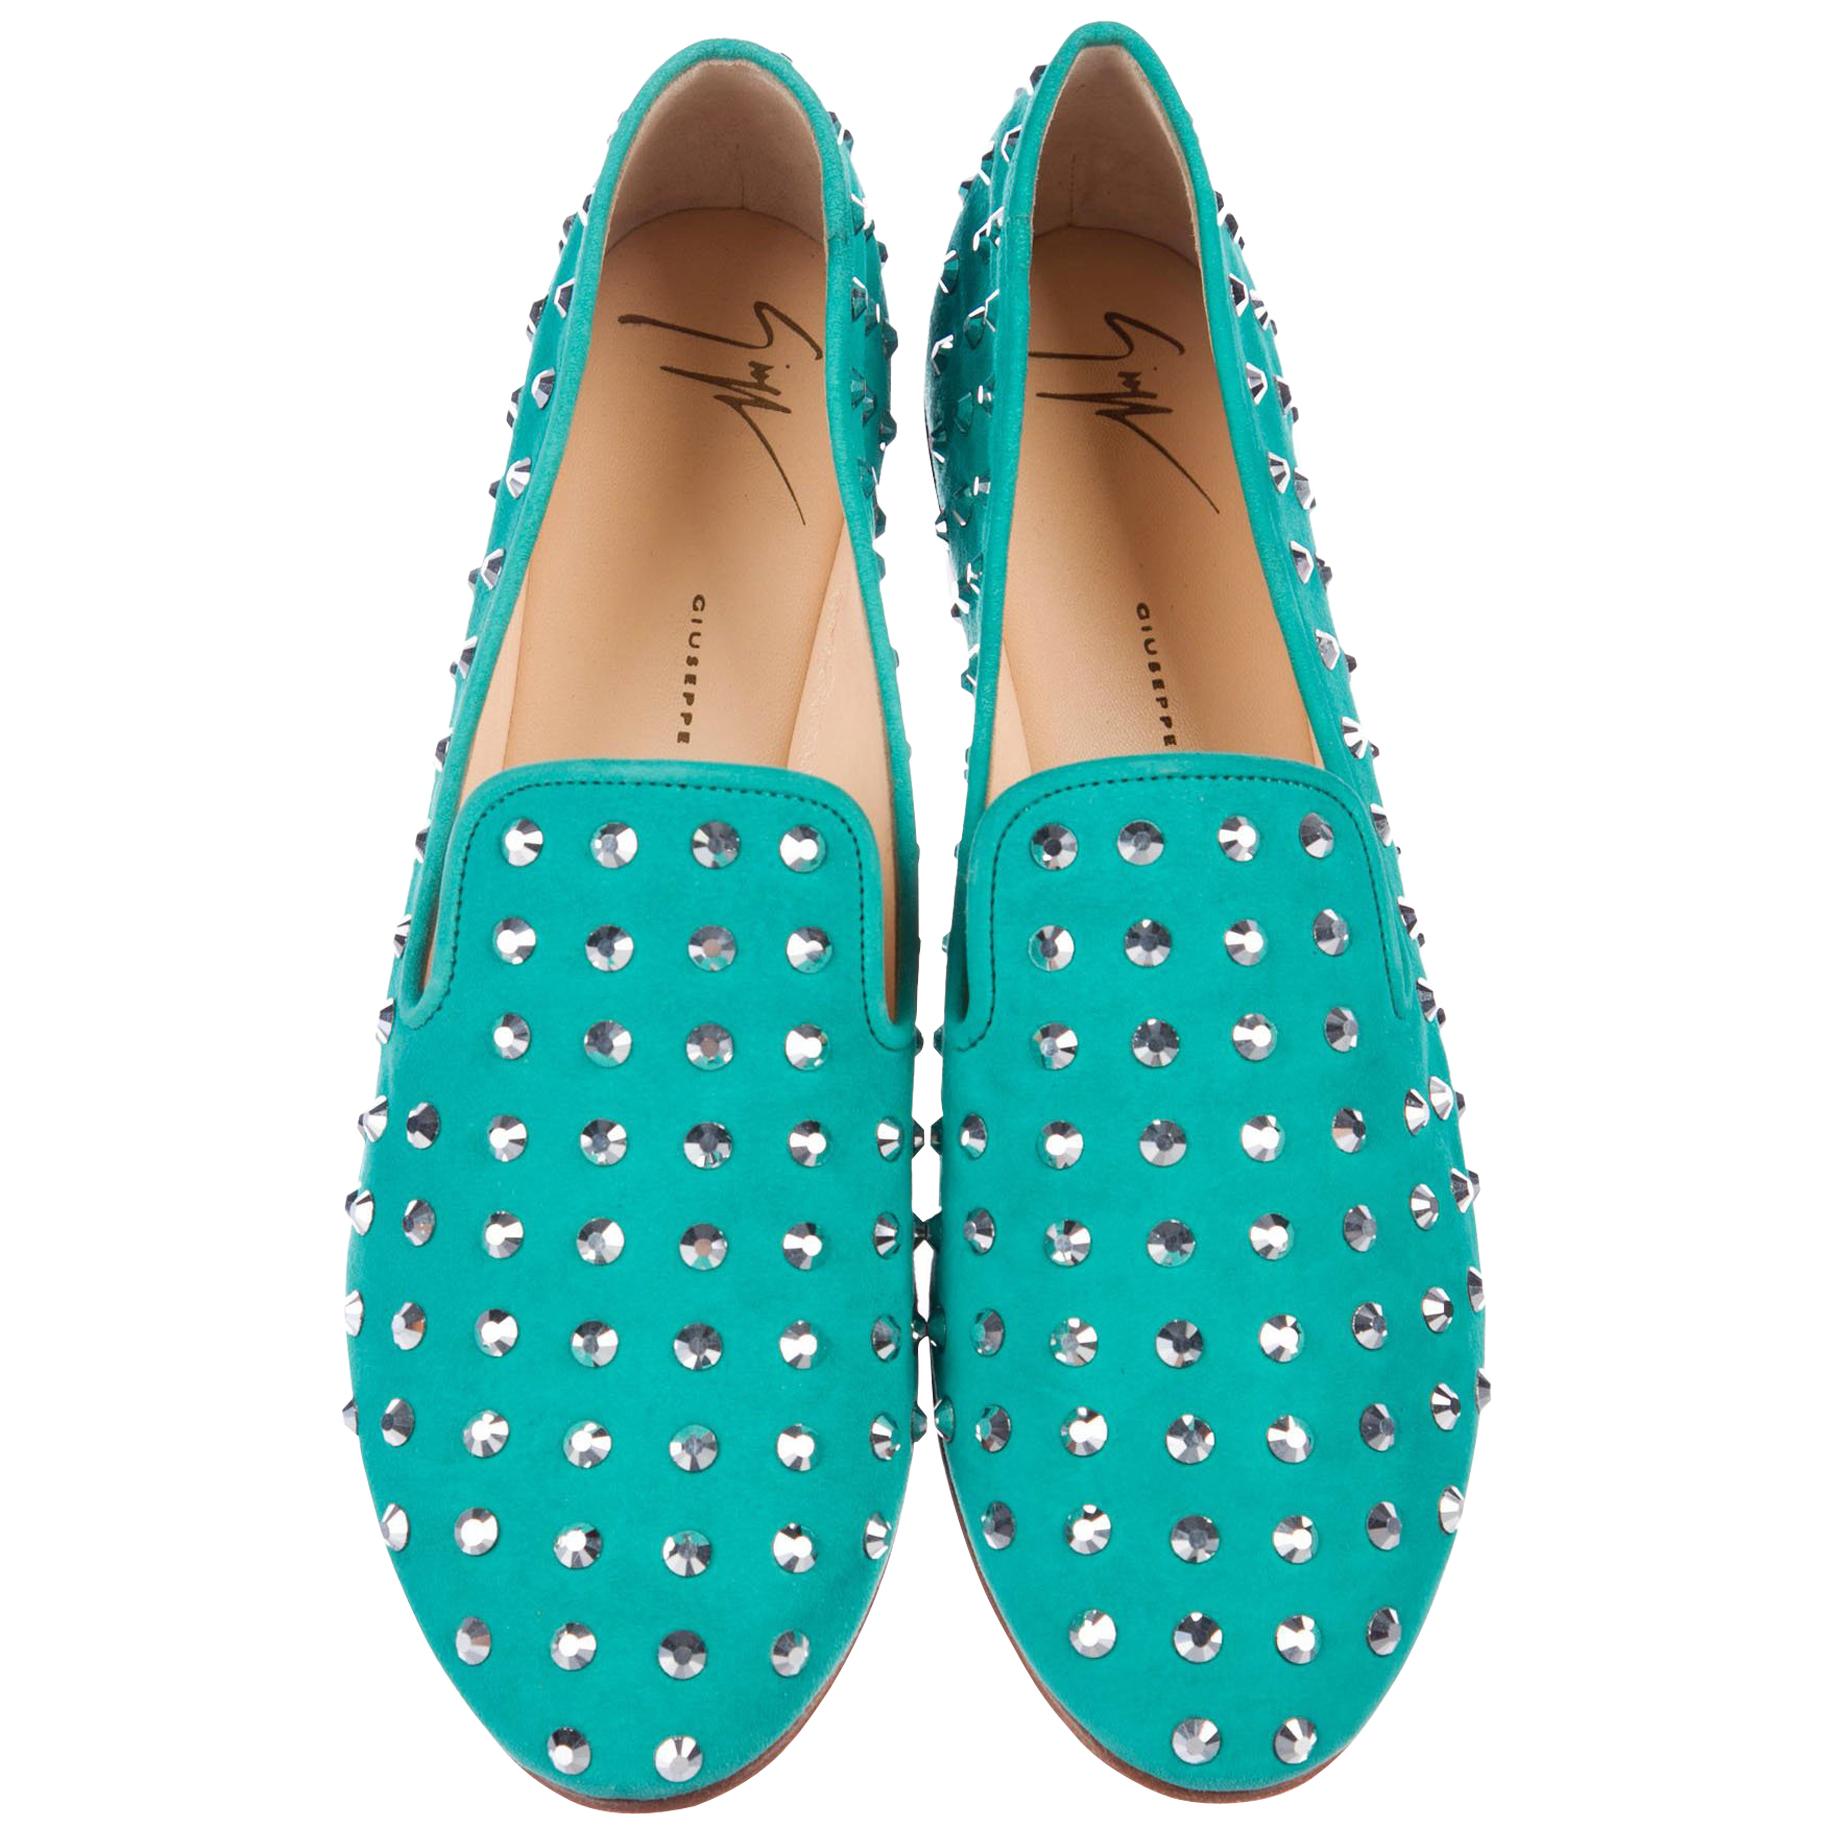 New Giuseppe Zanotti Mirrored Studs Embellished Aquamarine Flats Loafers 38 - 8